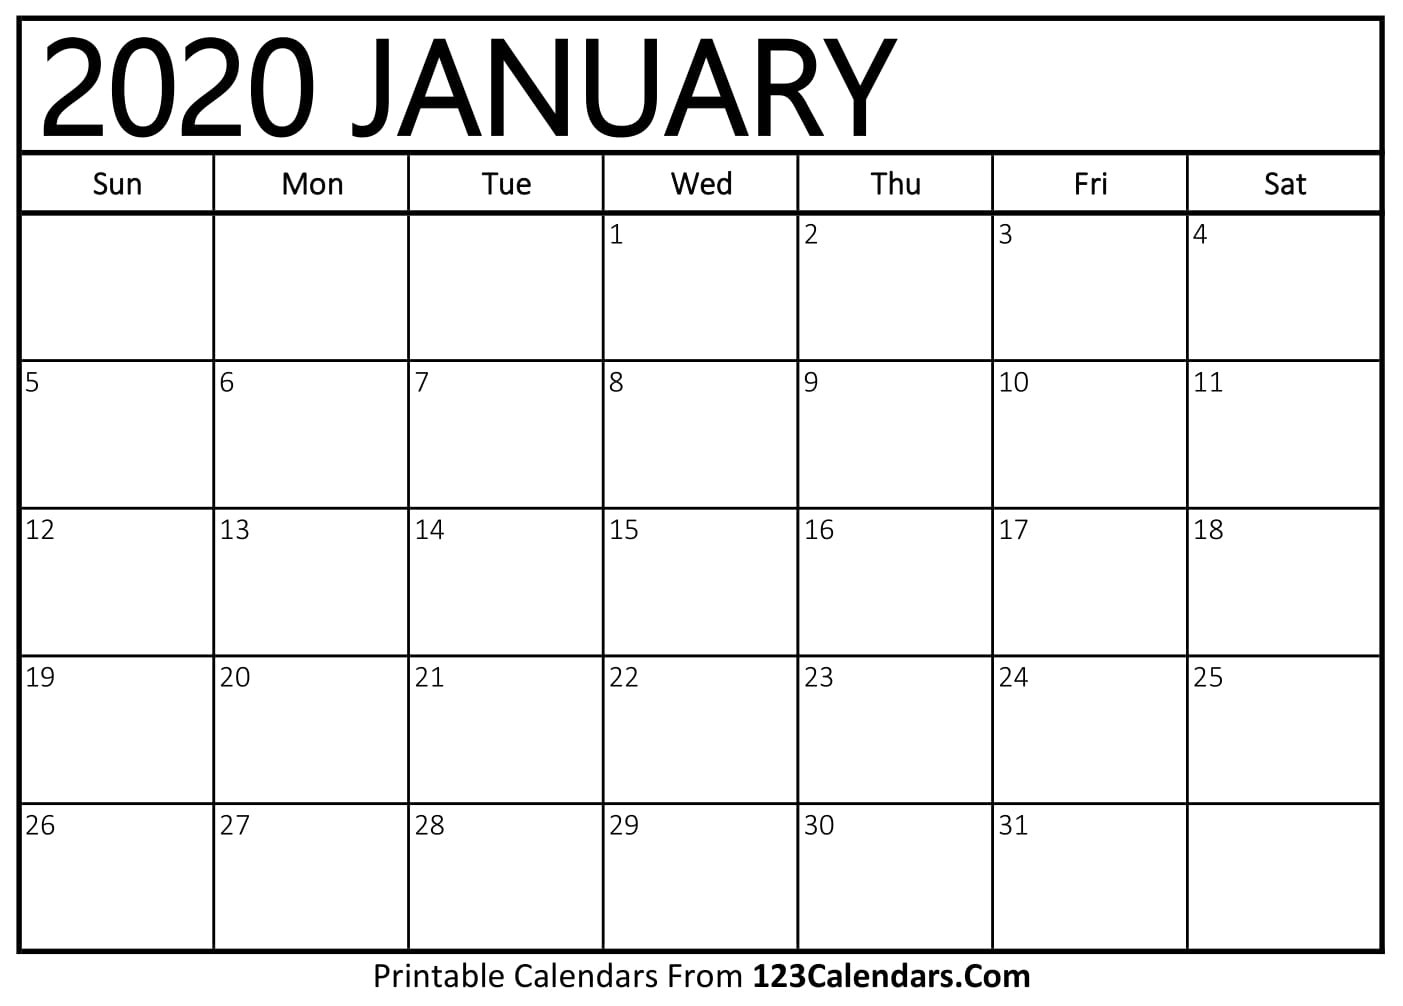 Free Printable Calendar | 123Calendars-January Thru December 2020 Printable Monthly Calendar